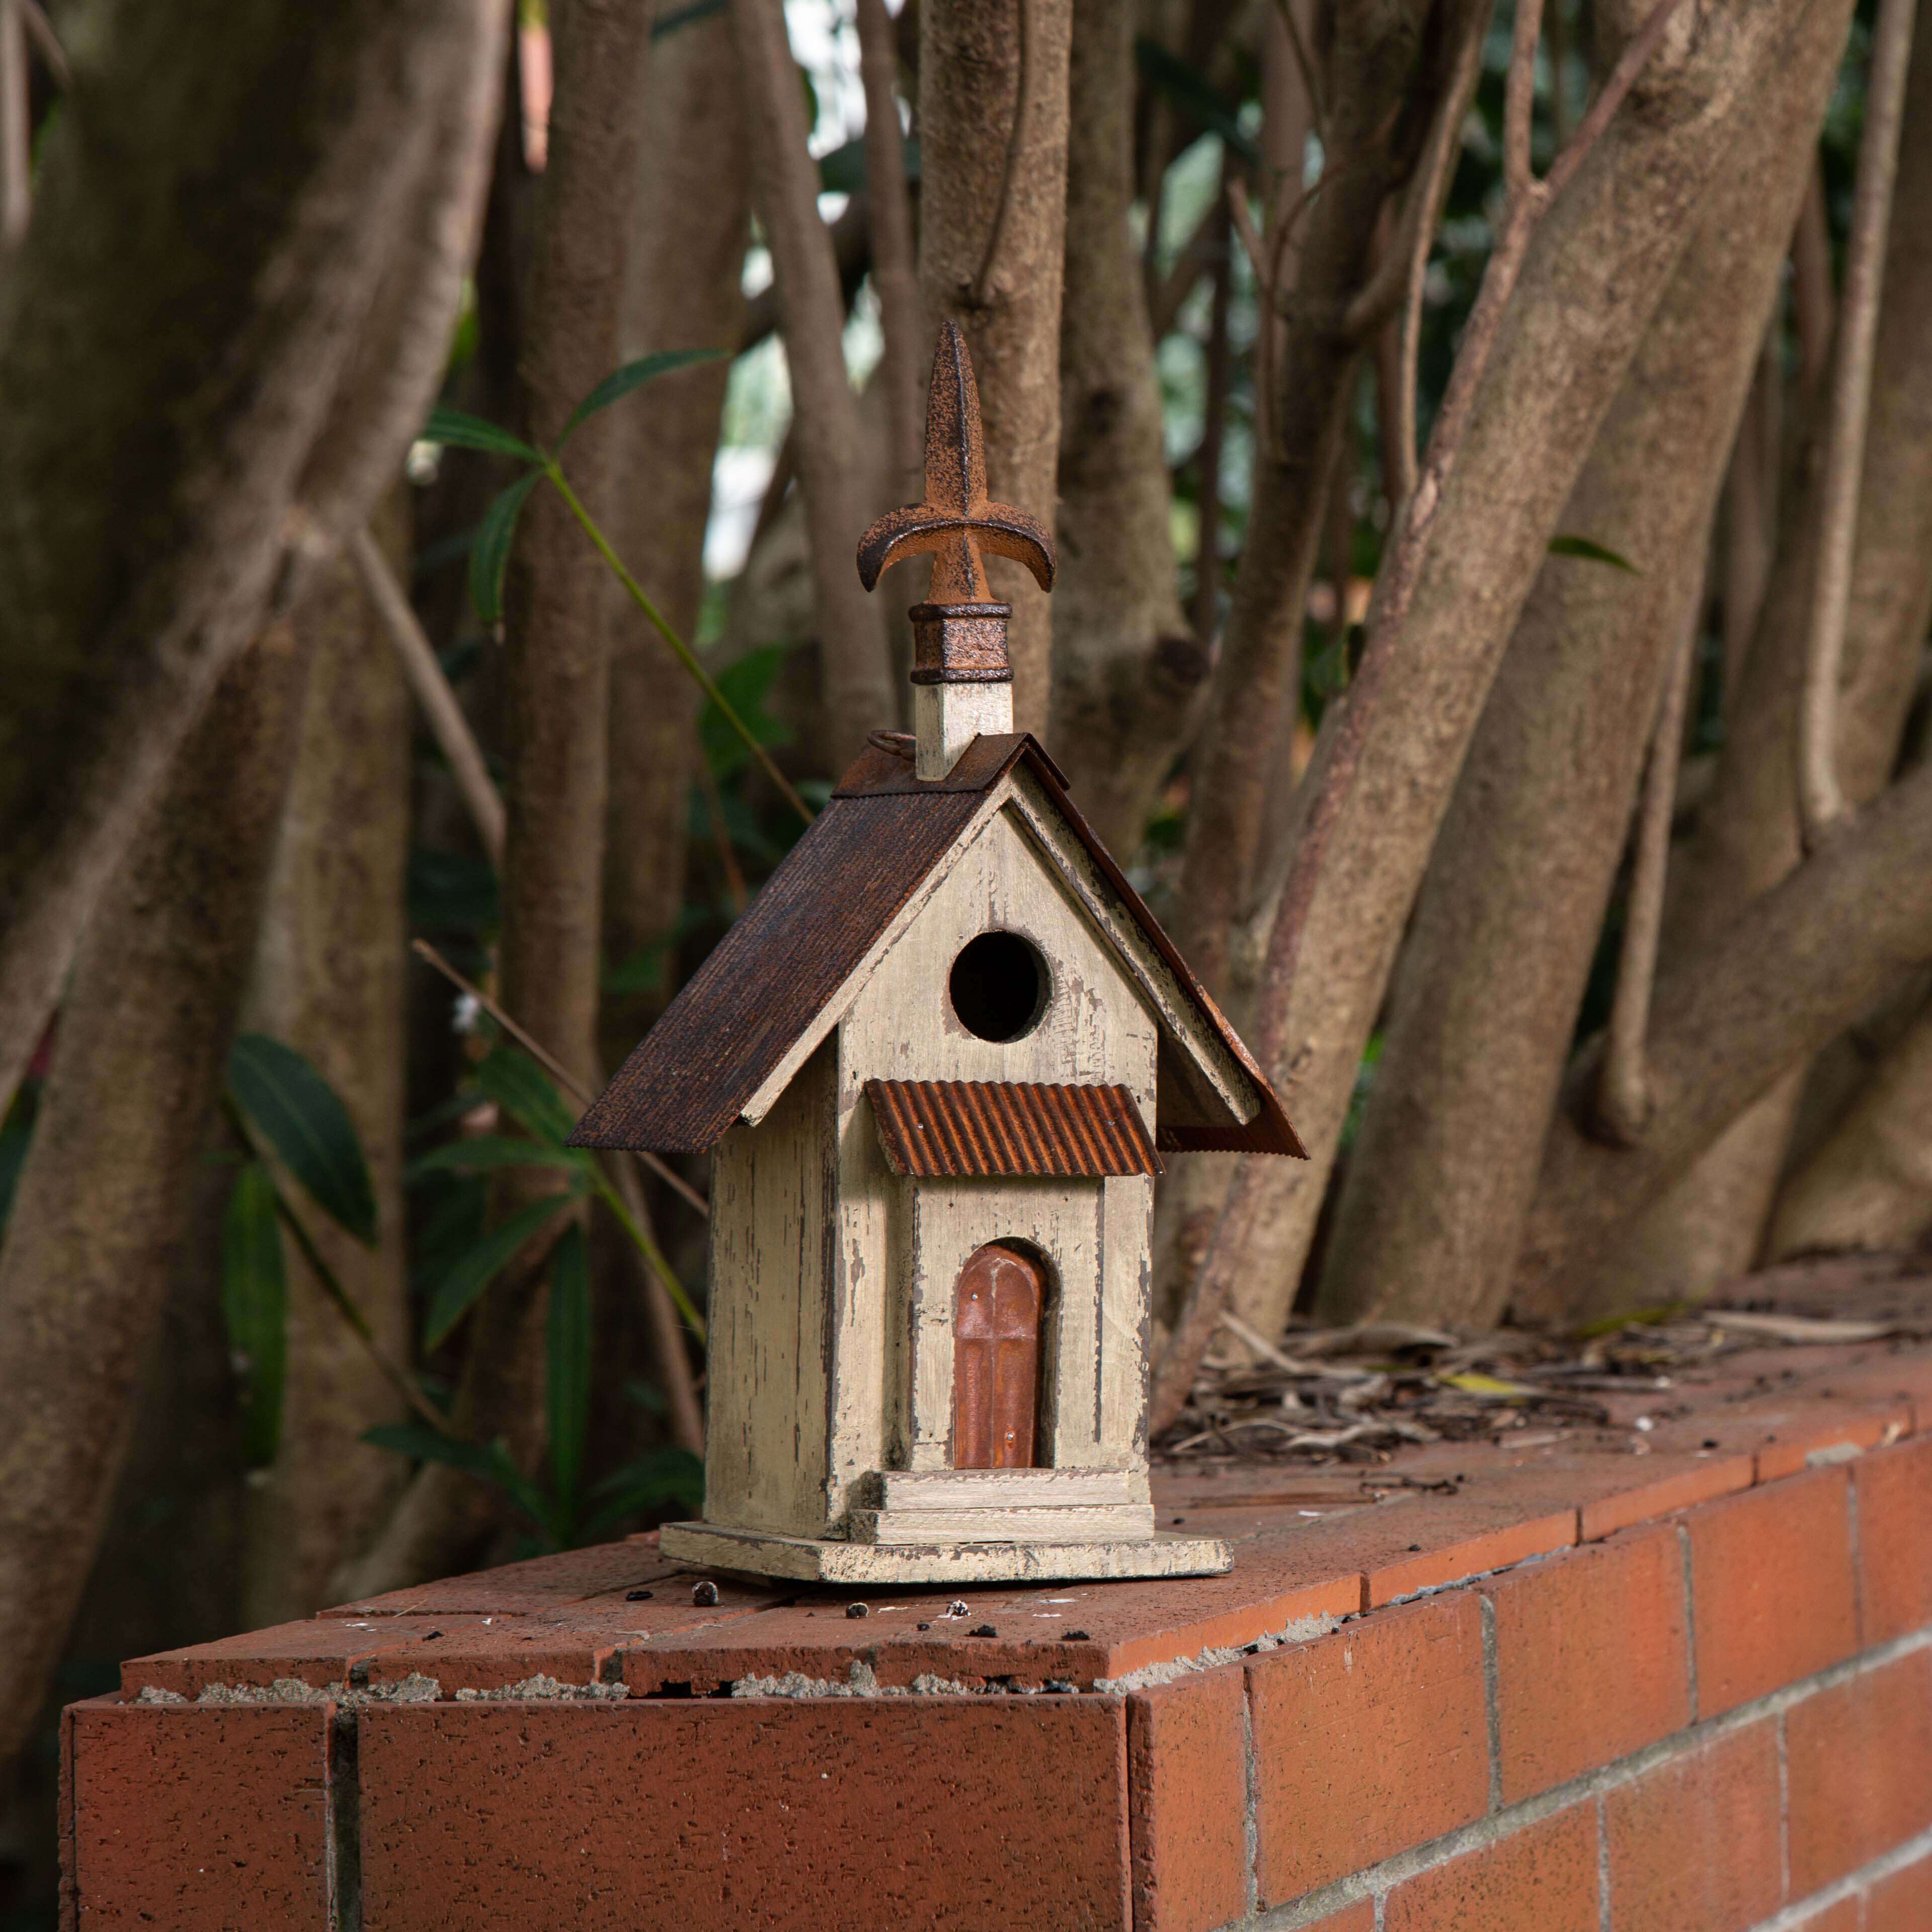 Glitzhome Rustic Wood Garden Church Model Birdhouse - image 2 of 9